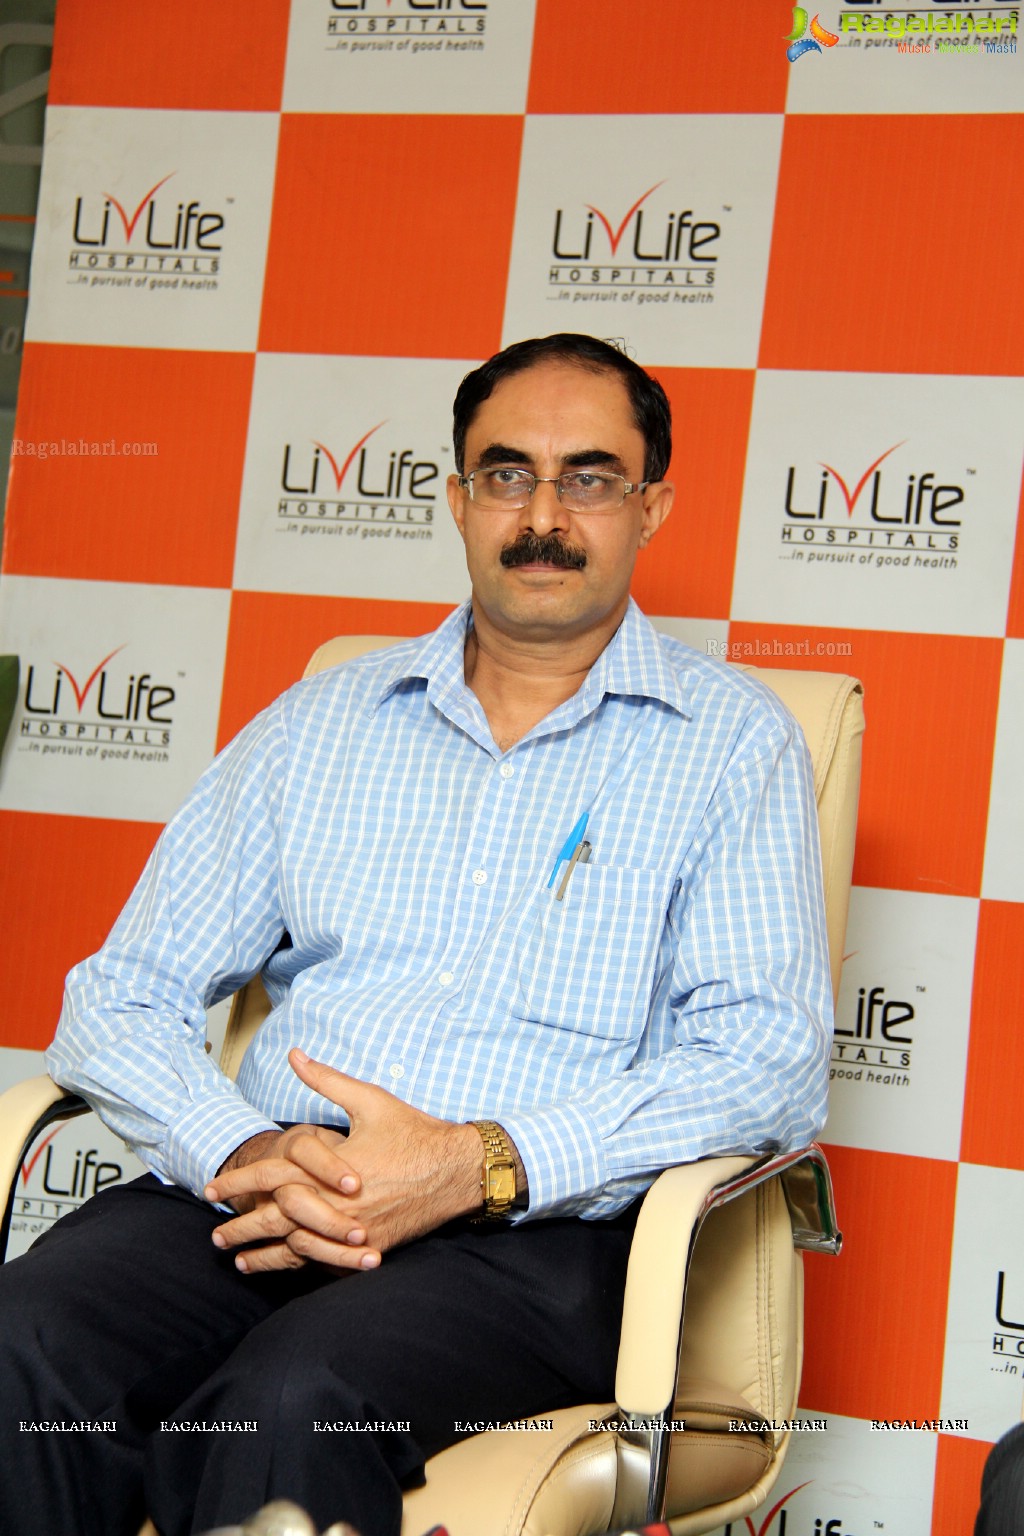 Livlife Hospitals Press Conference with Dr. Nandakishore Dukkipati